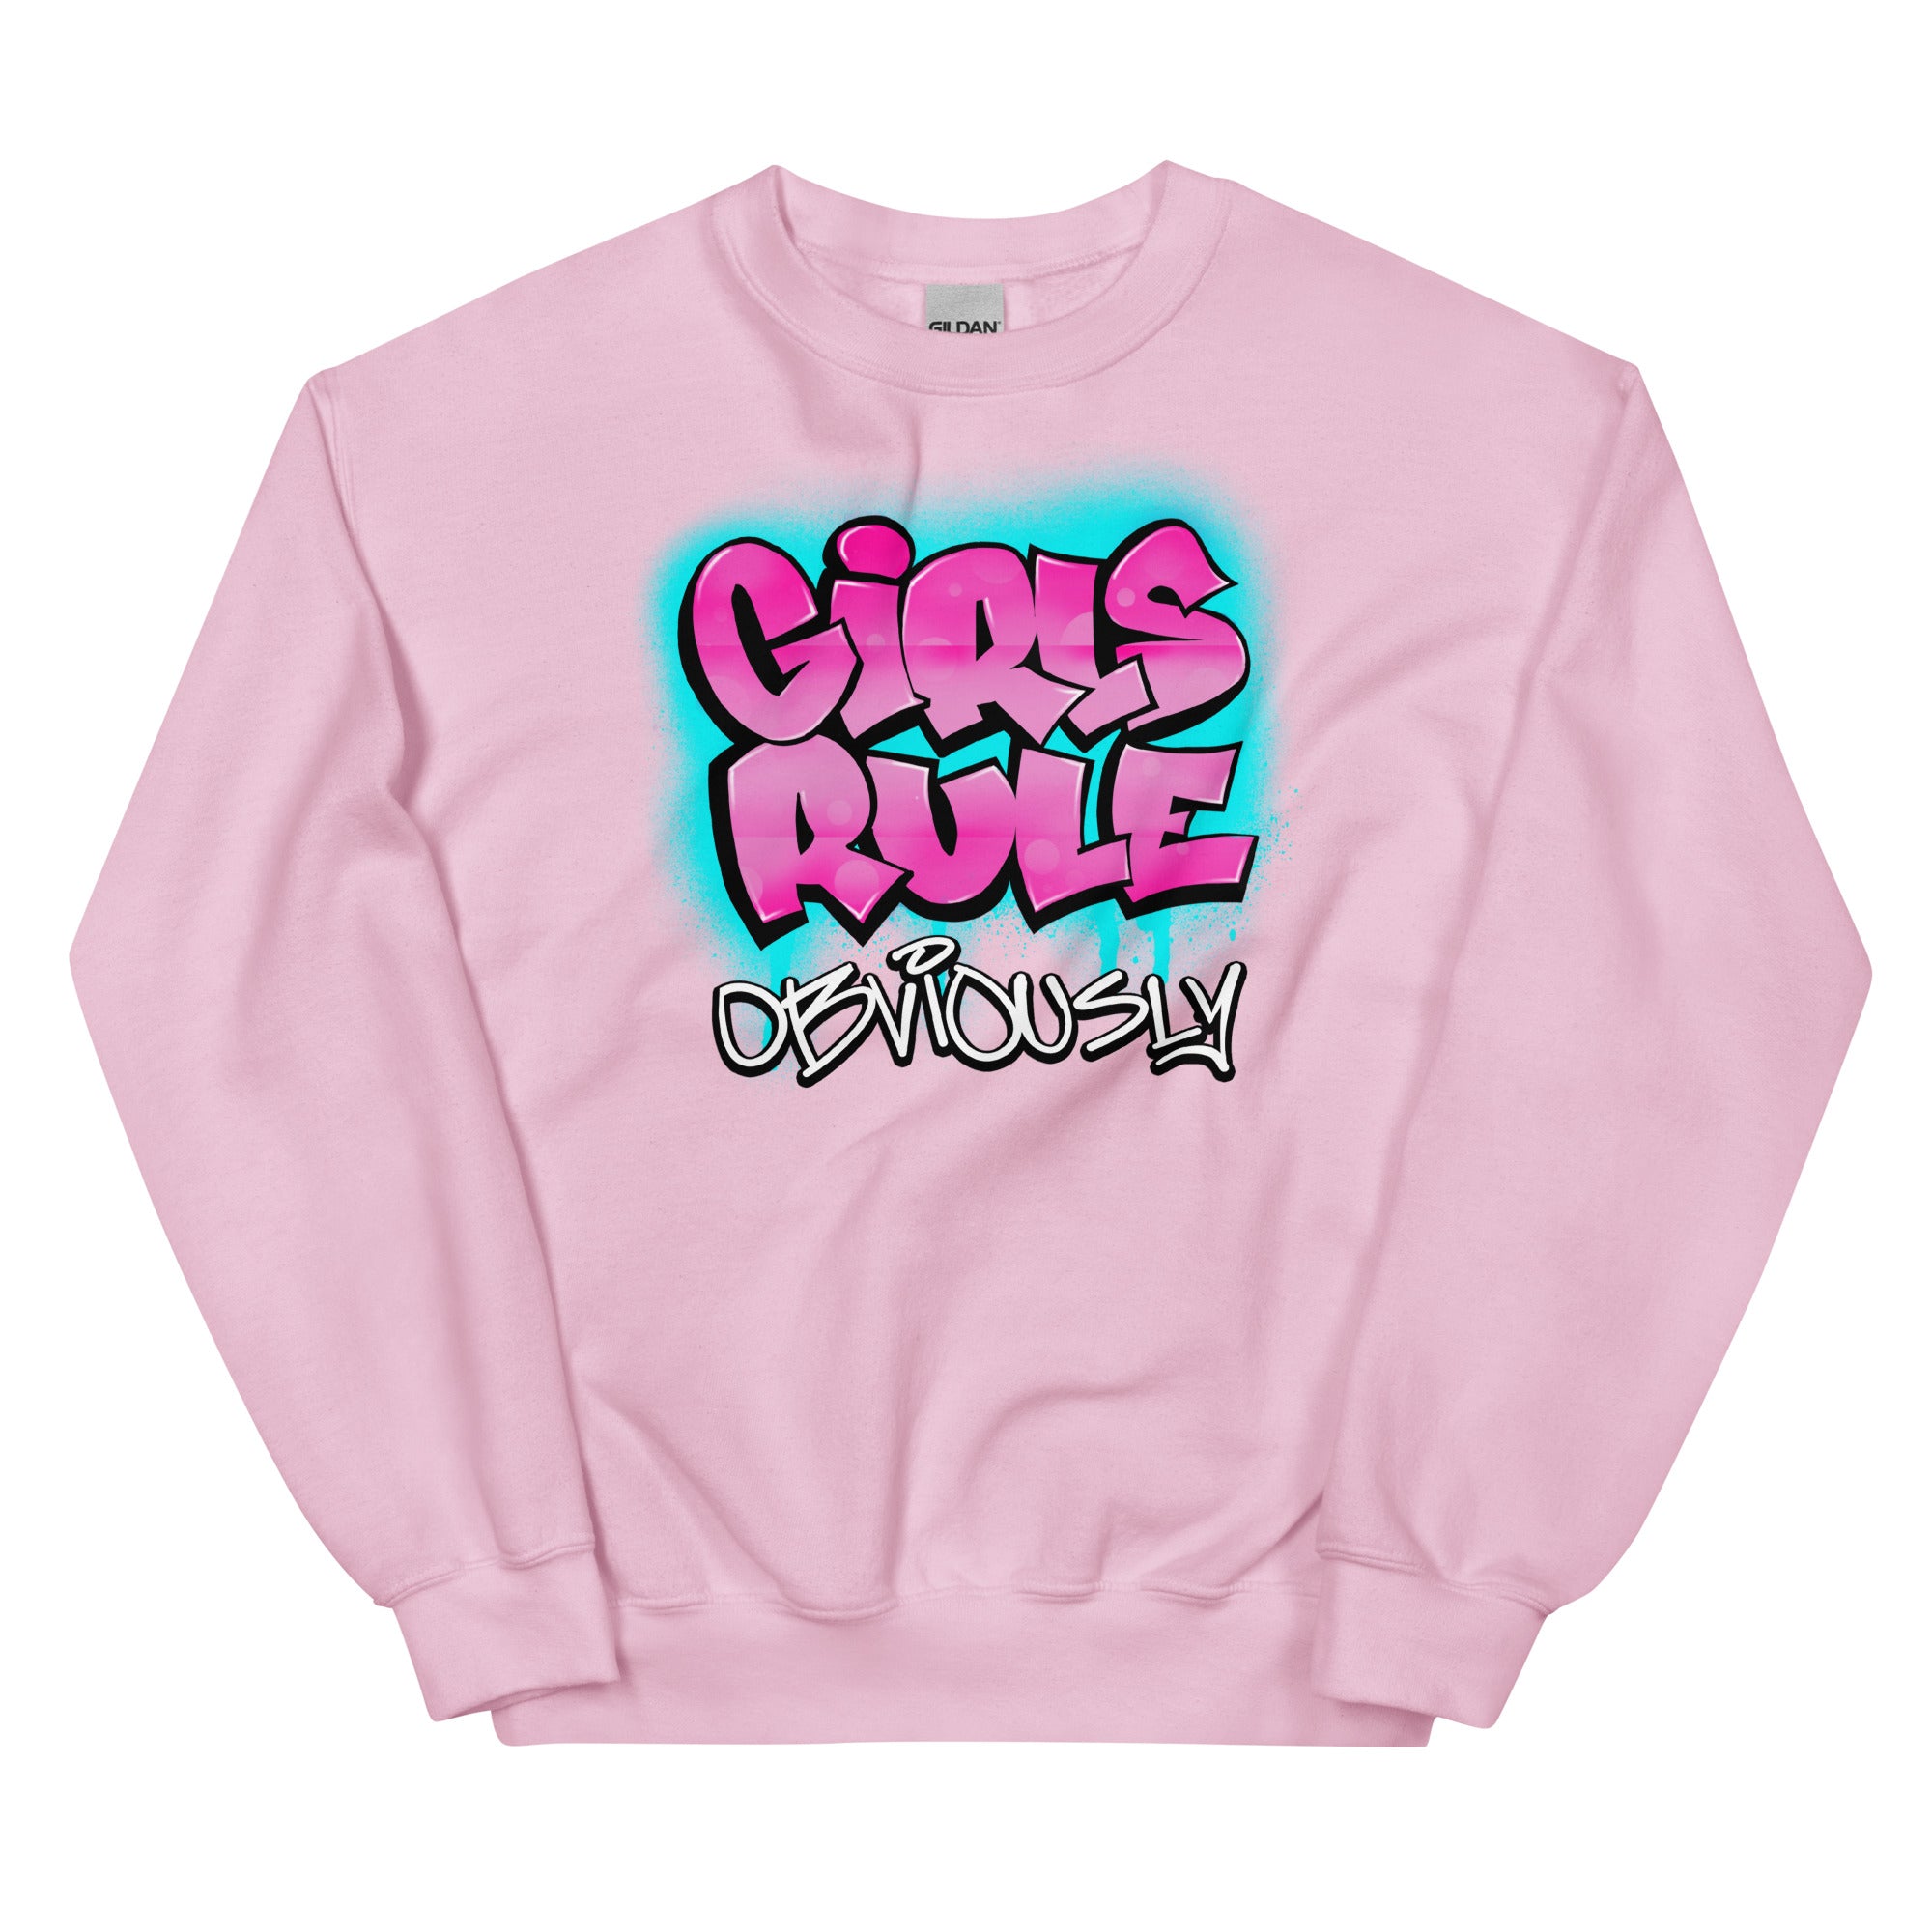 GIRLS RULE OBVIOUSLY - Unisex Sweatshirt